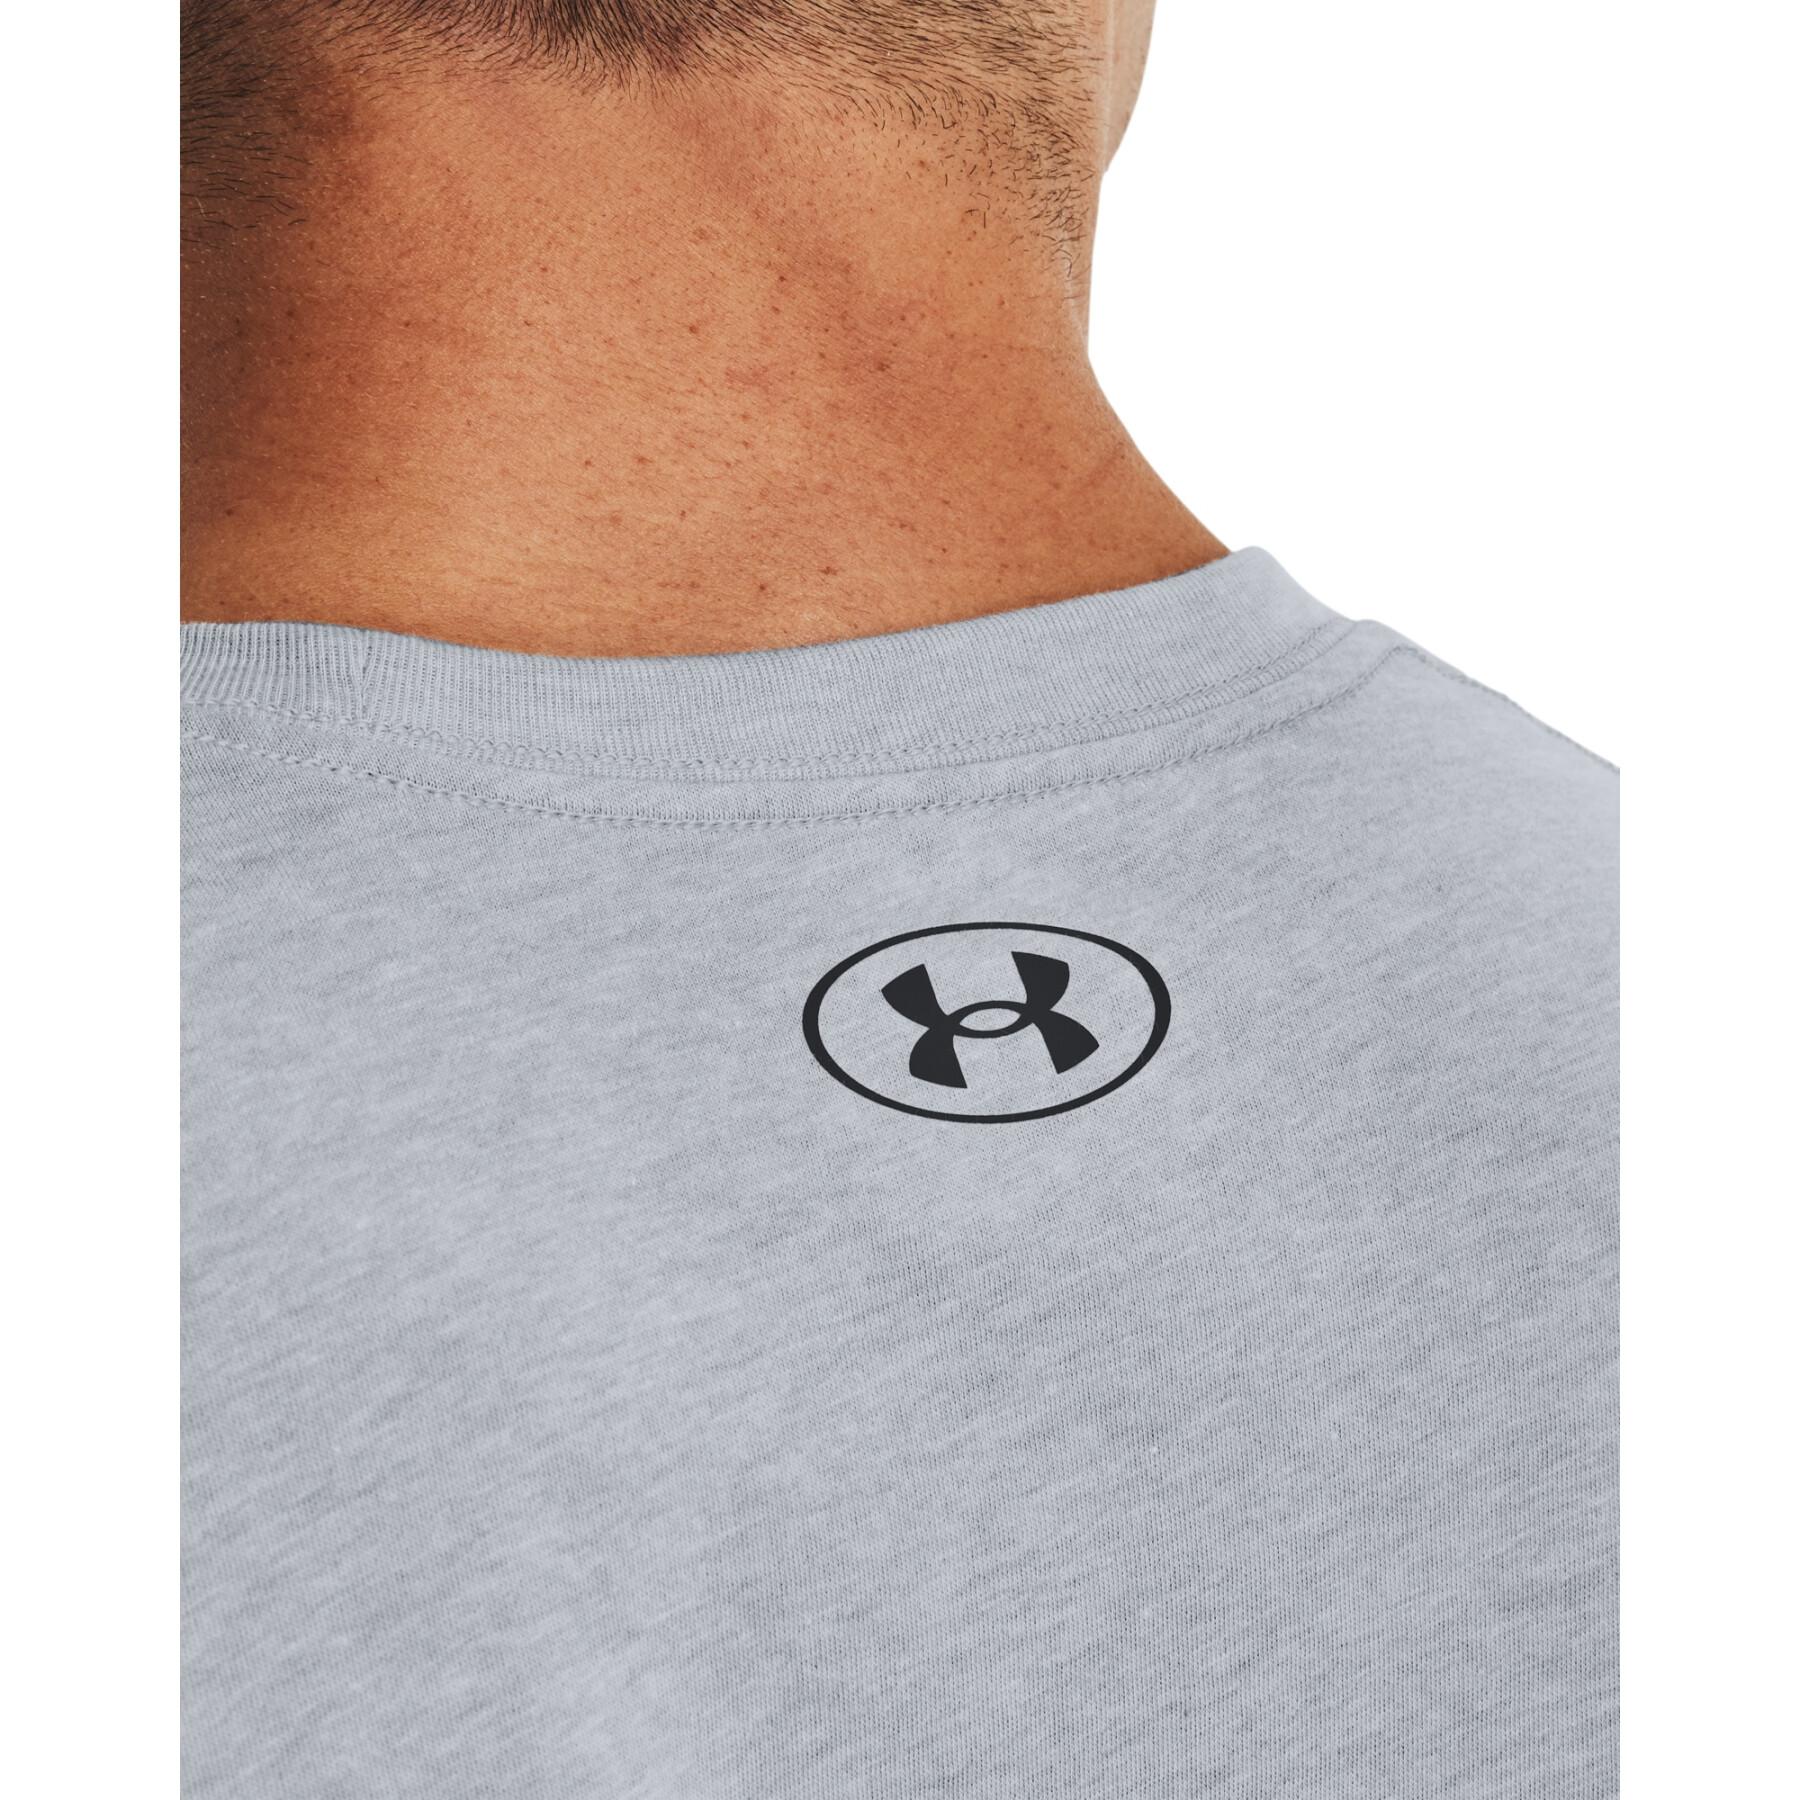 Koszulka Under Armour Bball Branded Wordmark